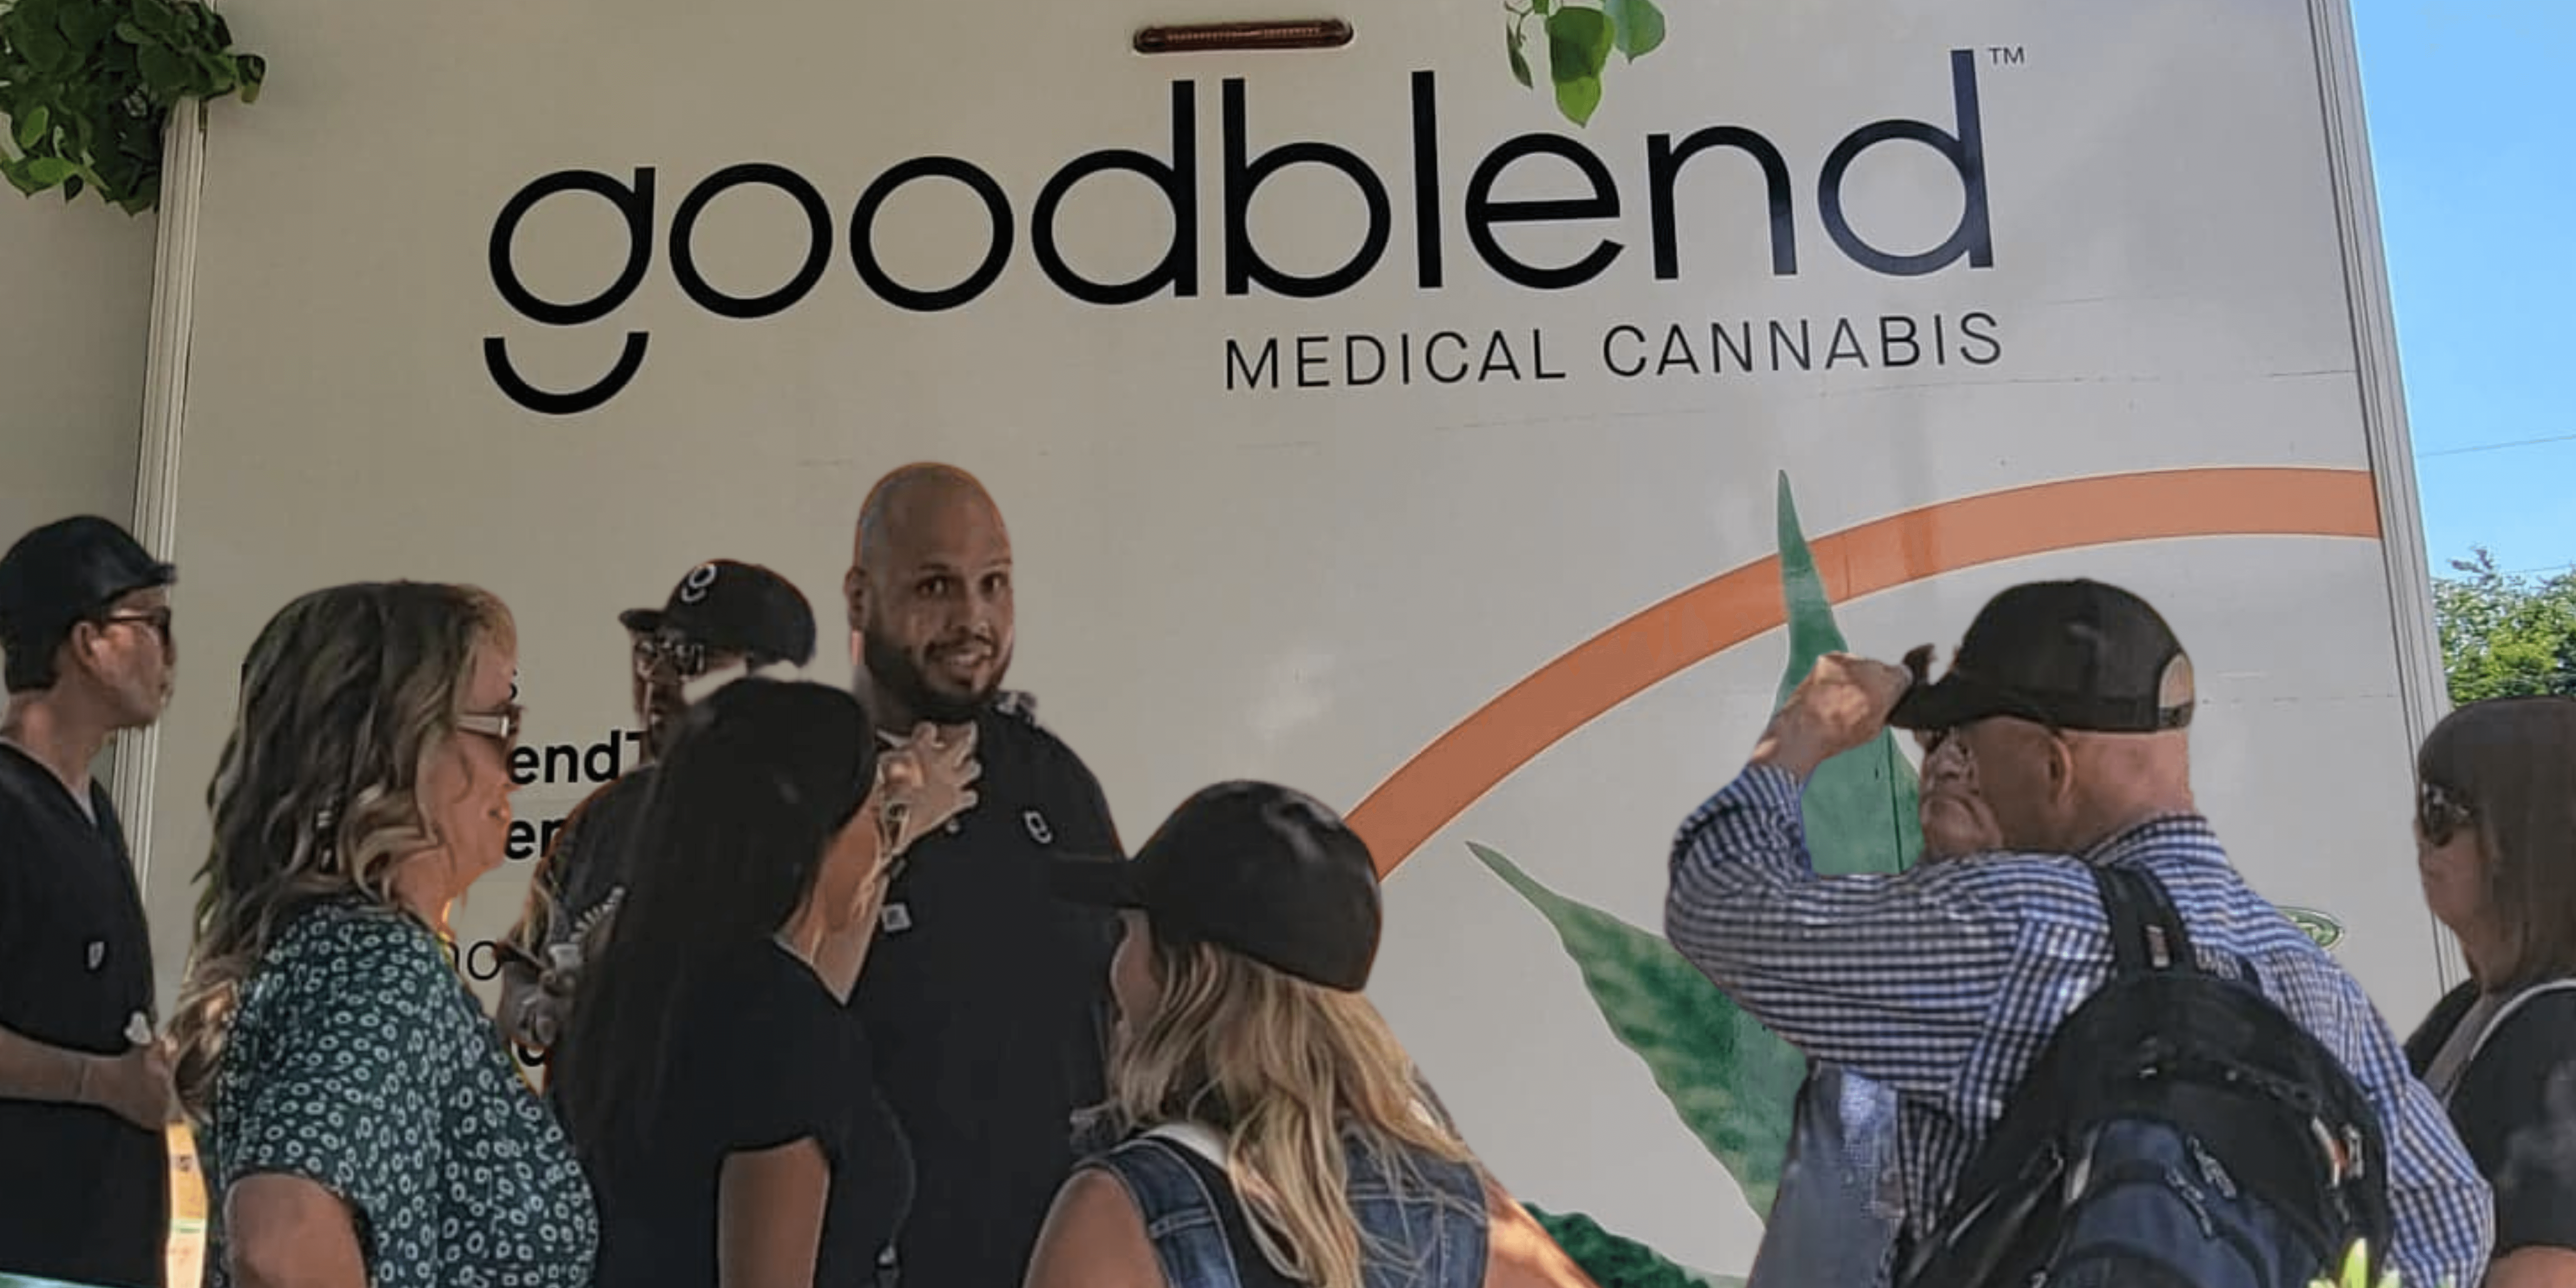 goodblend cannabus texas medical marijuana